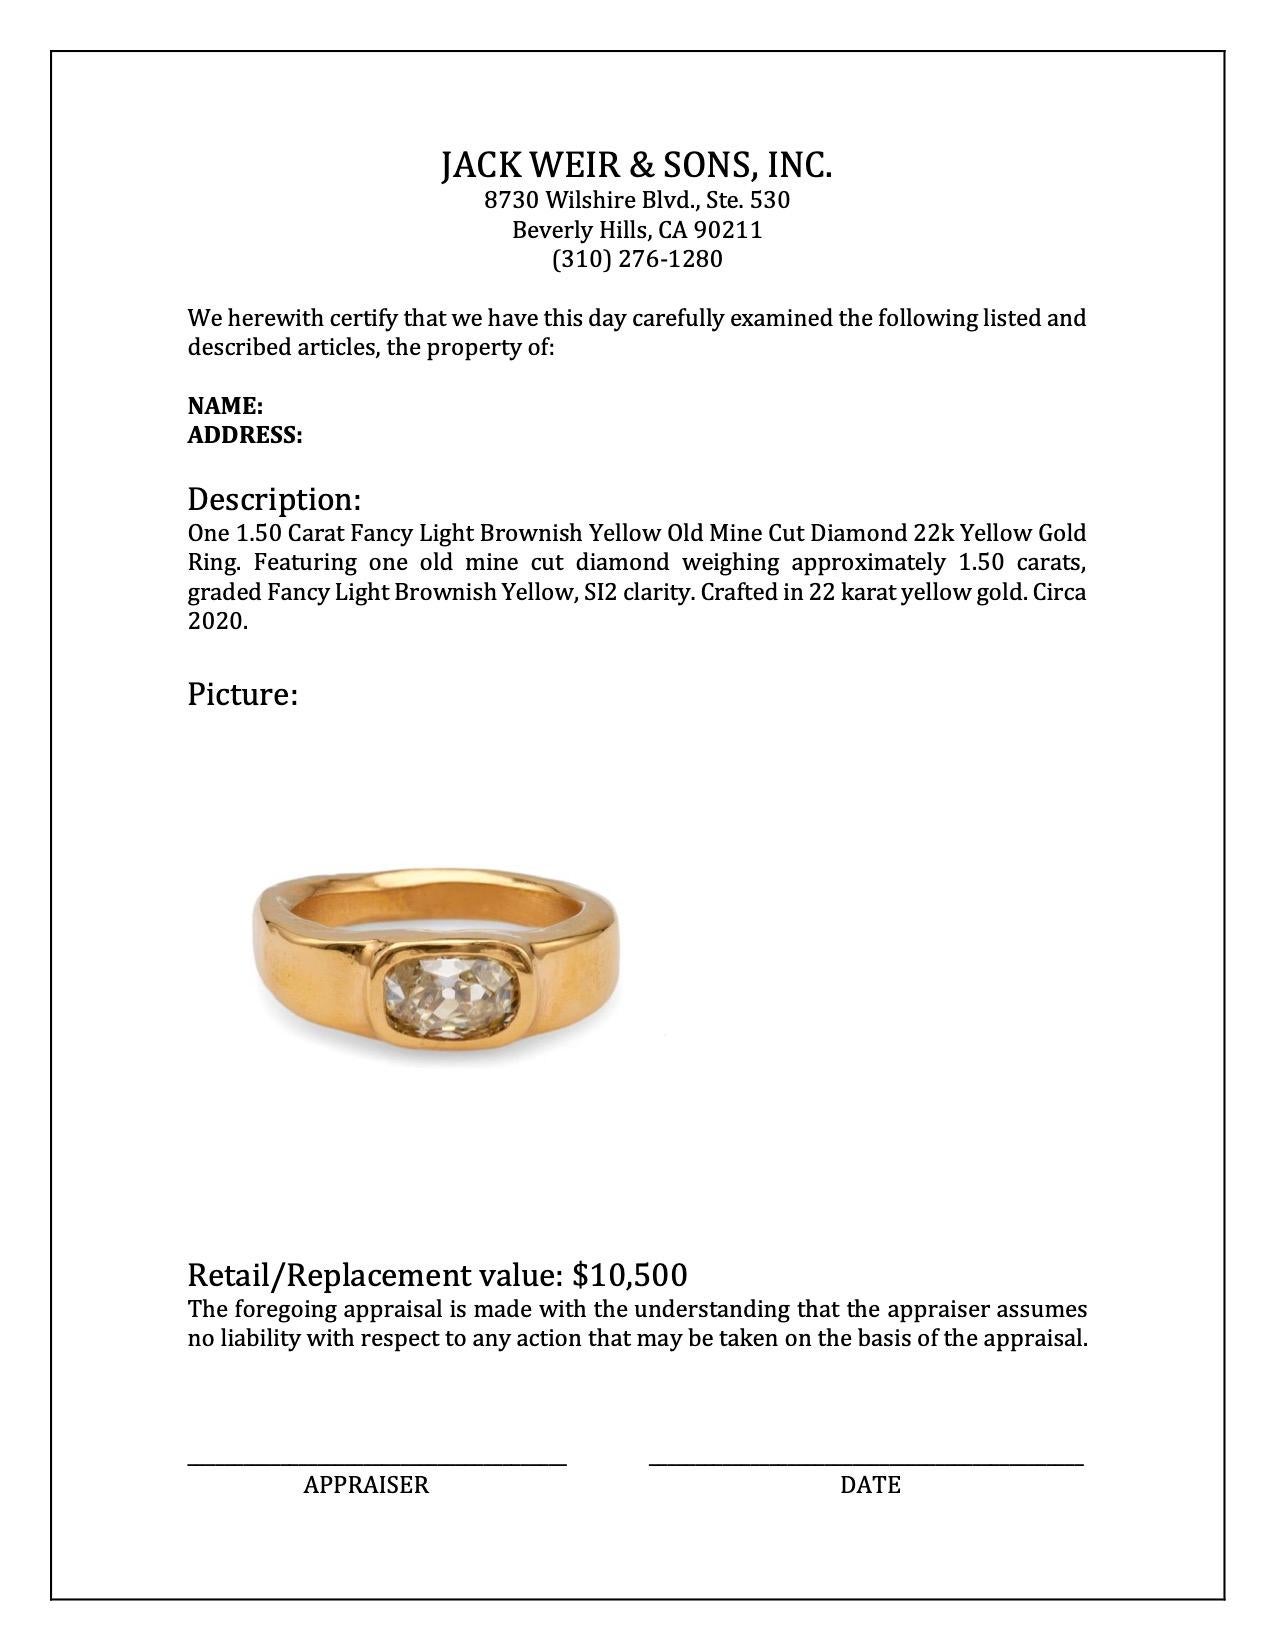 1.50 Carat Fancy Light Brownish Yellow Old Mine Cut Diamond 22k Yellow Gold Ring For Sale 1